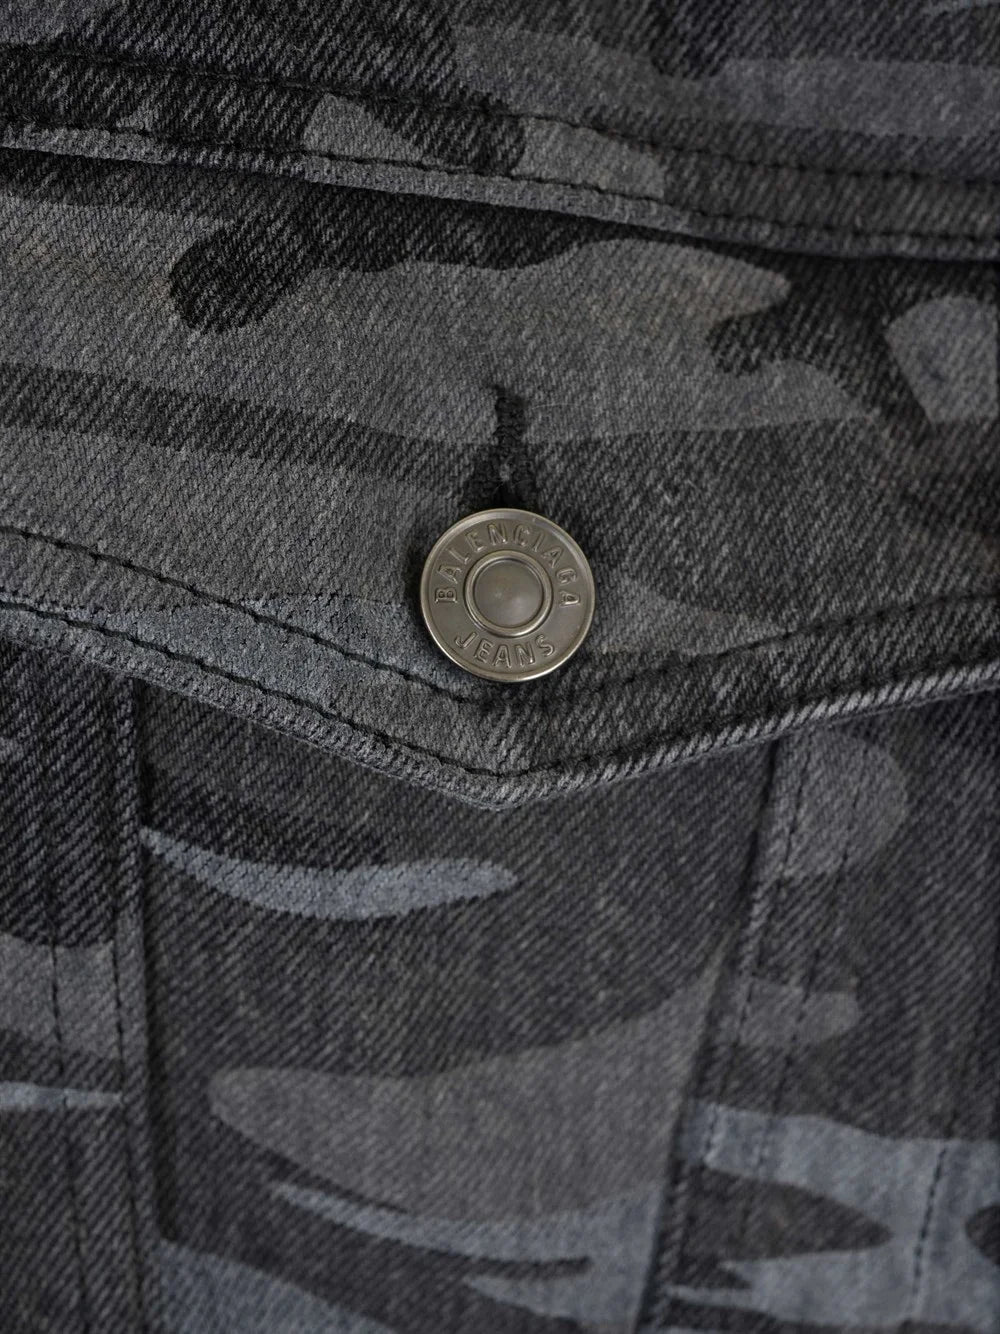 Balenciaga camouflage-print denim jacket